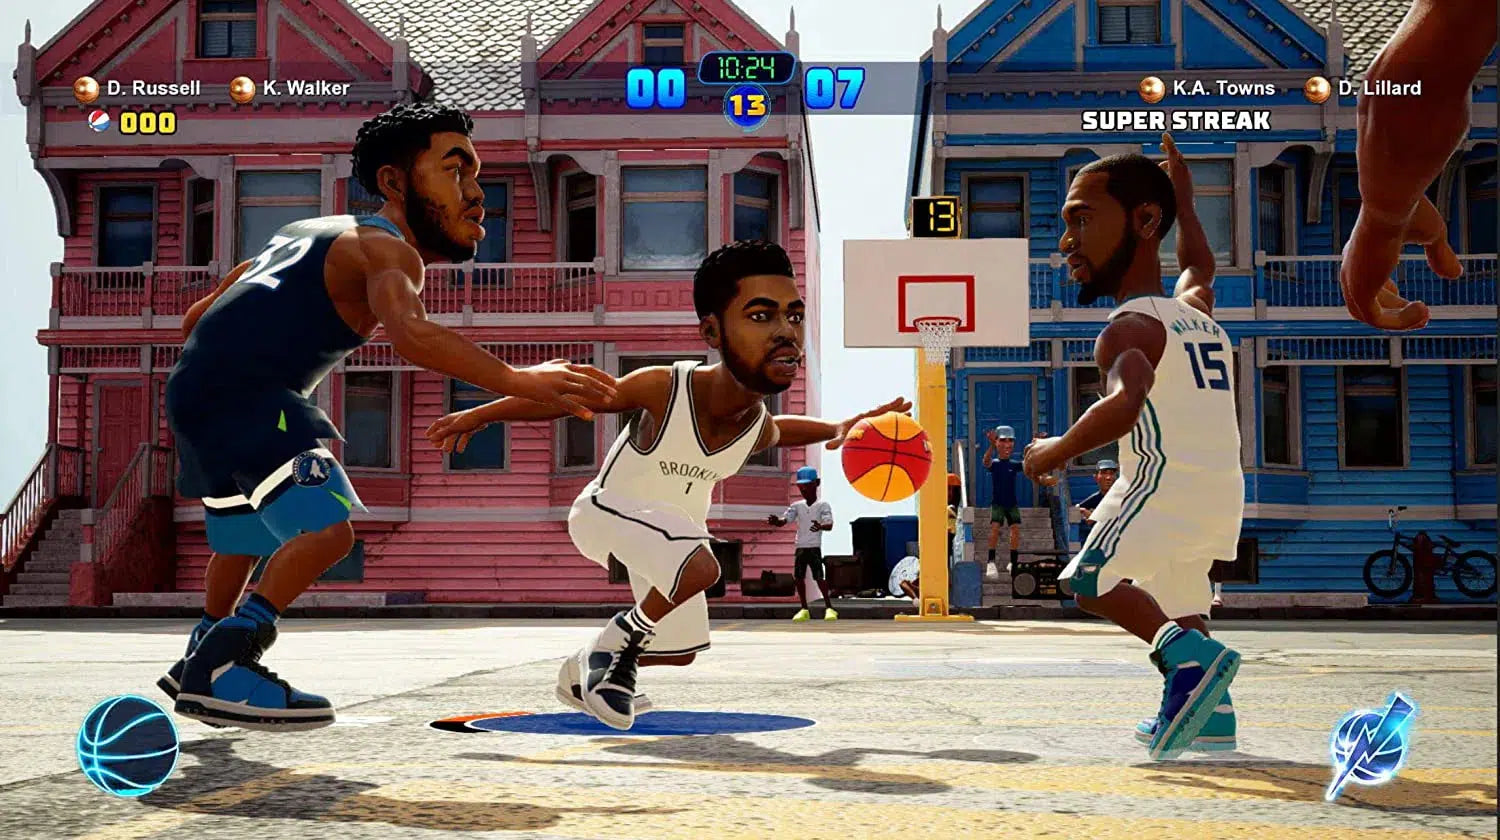 NBA 2K: Playgrounds 2 - Xbox One